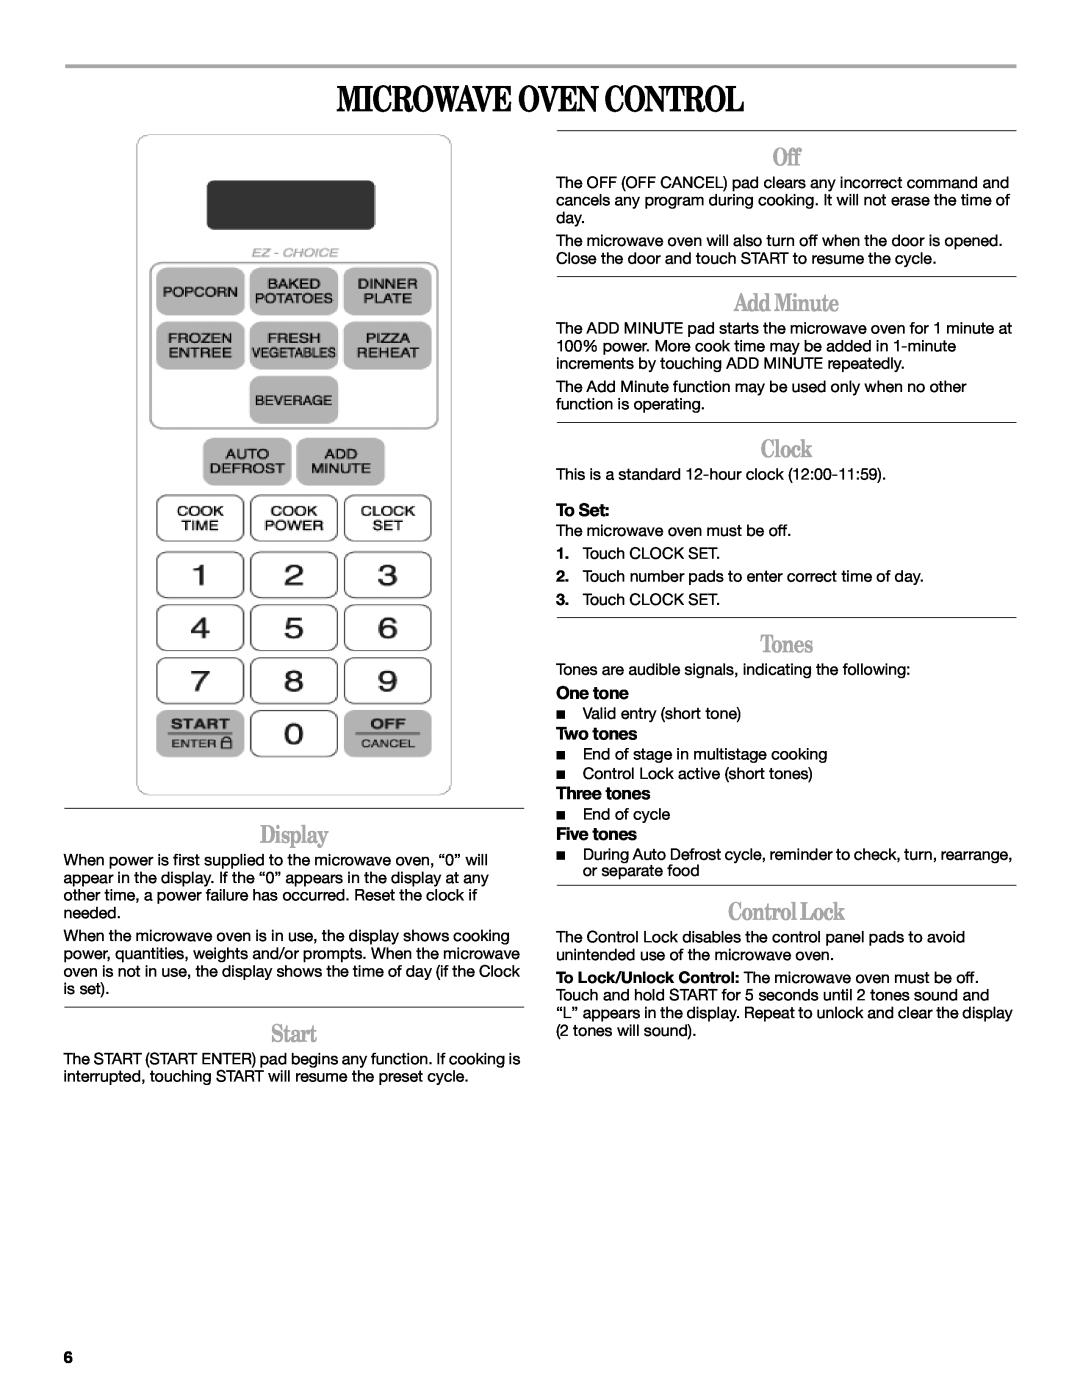 Whirlpool MT4078 manual Microwave Oven Control, Display, Start, AddMinute, Clock, Tones, ControlLock 